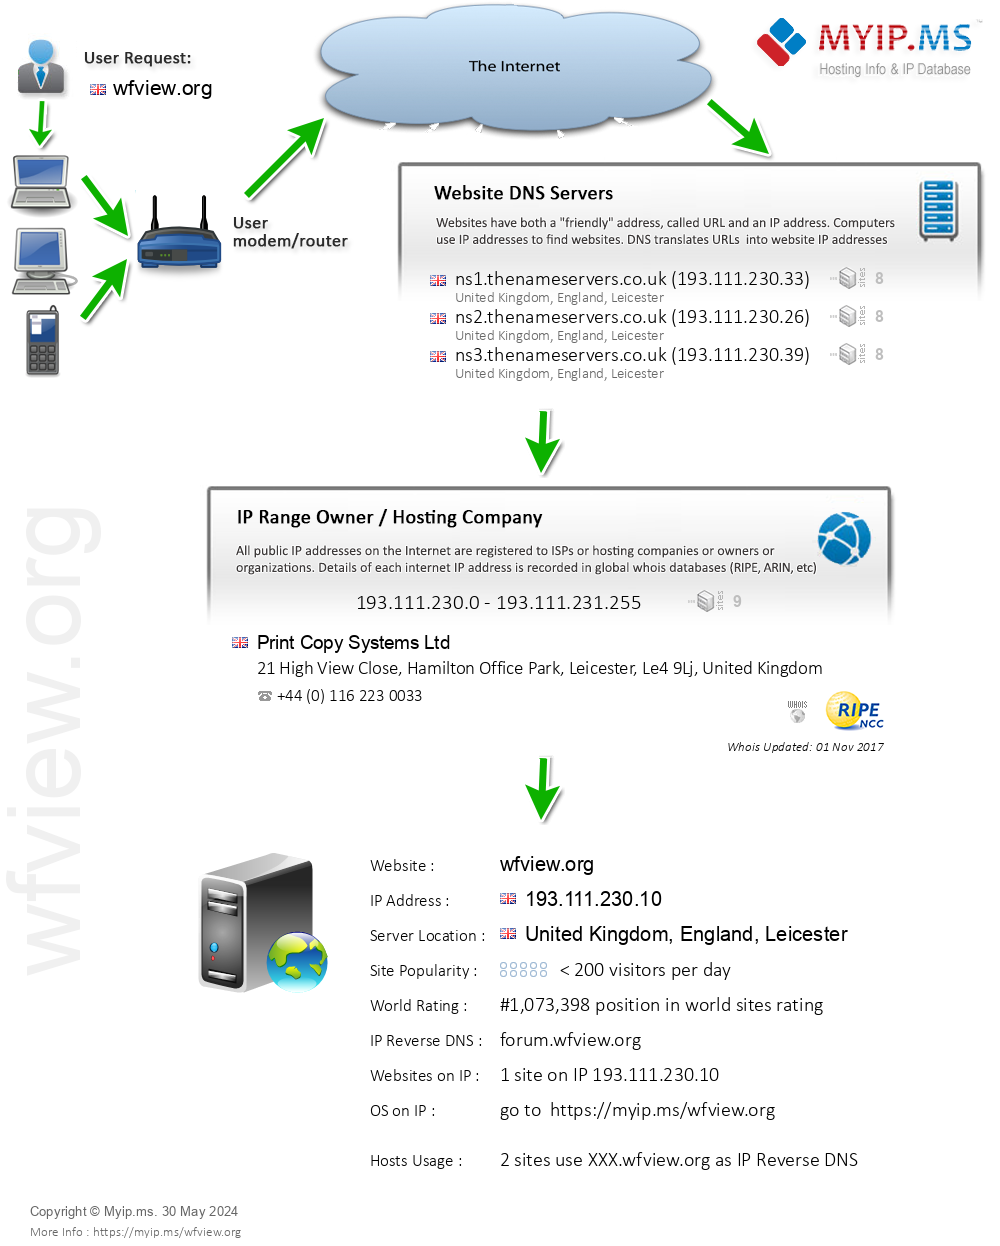 Wfview.org - Website Hosting Visual IP Diagram